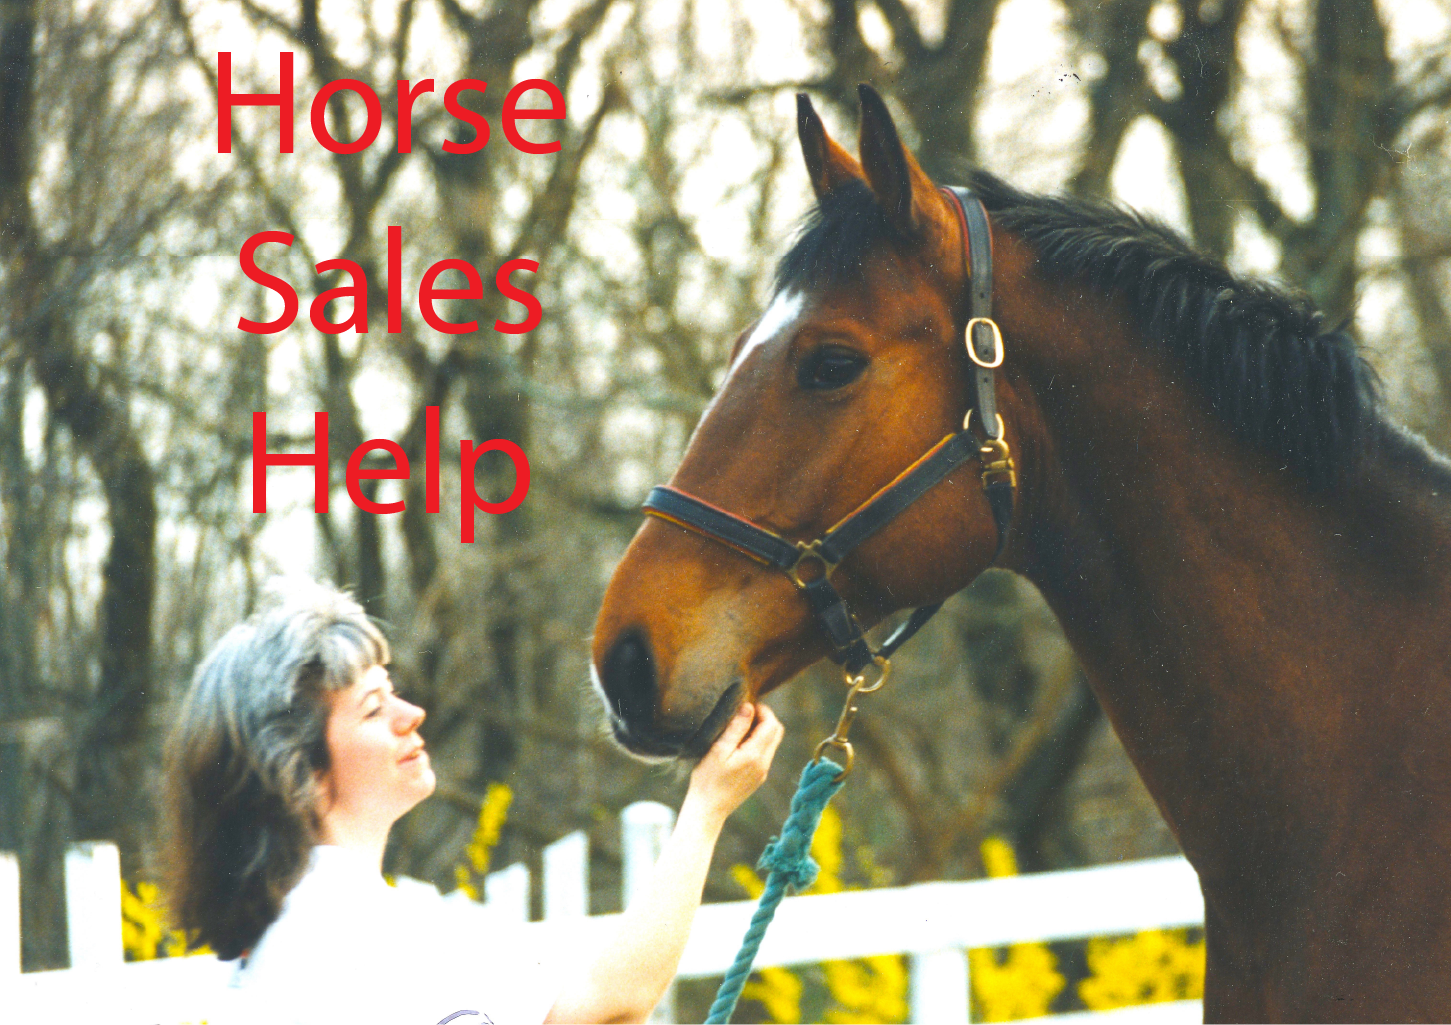 Horse Sales Help